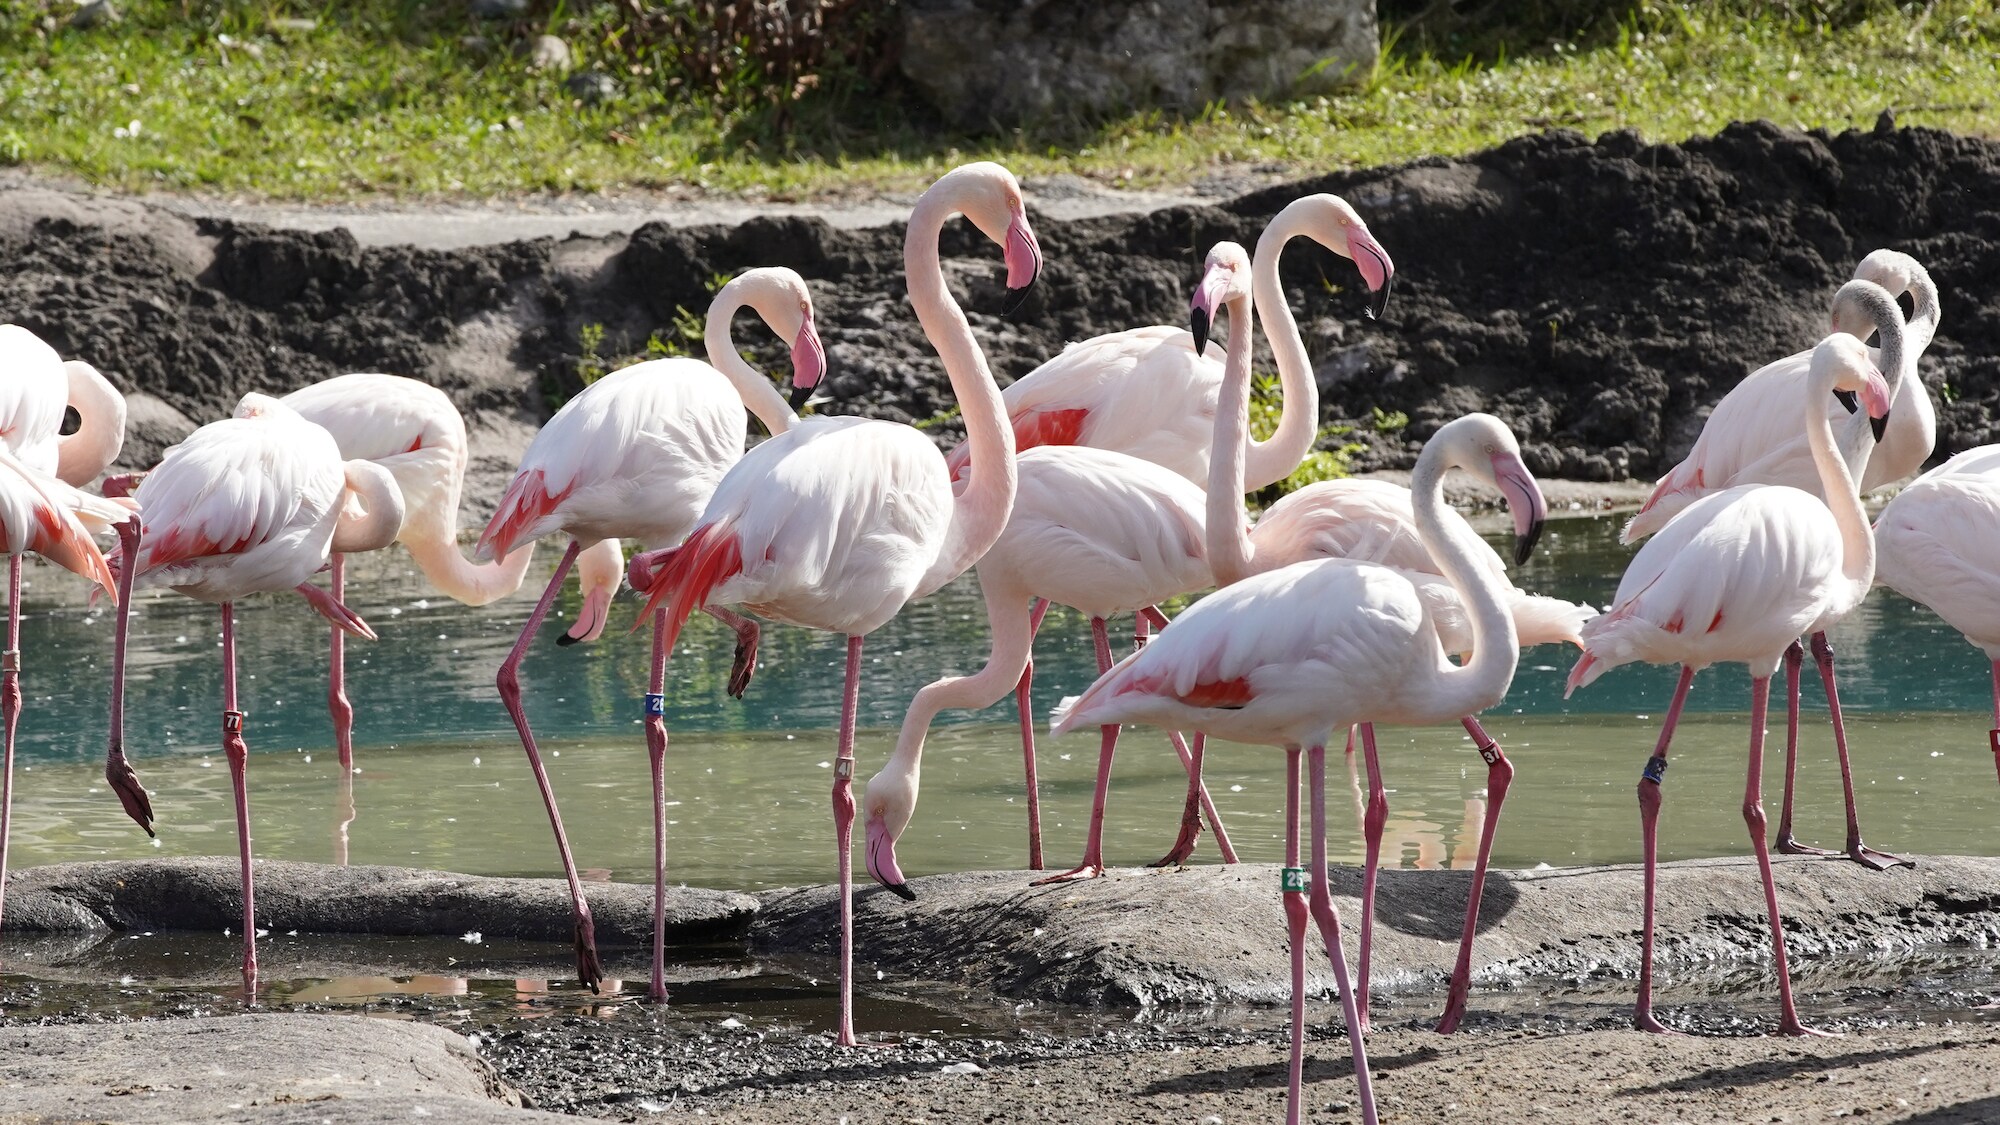 Greater Flamingos at Kilimanjaro Safari. (Disney)